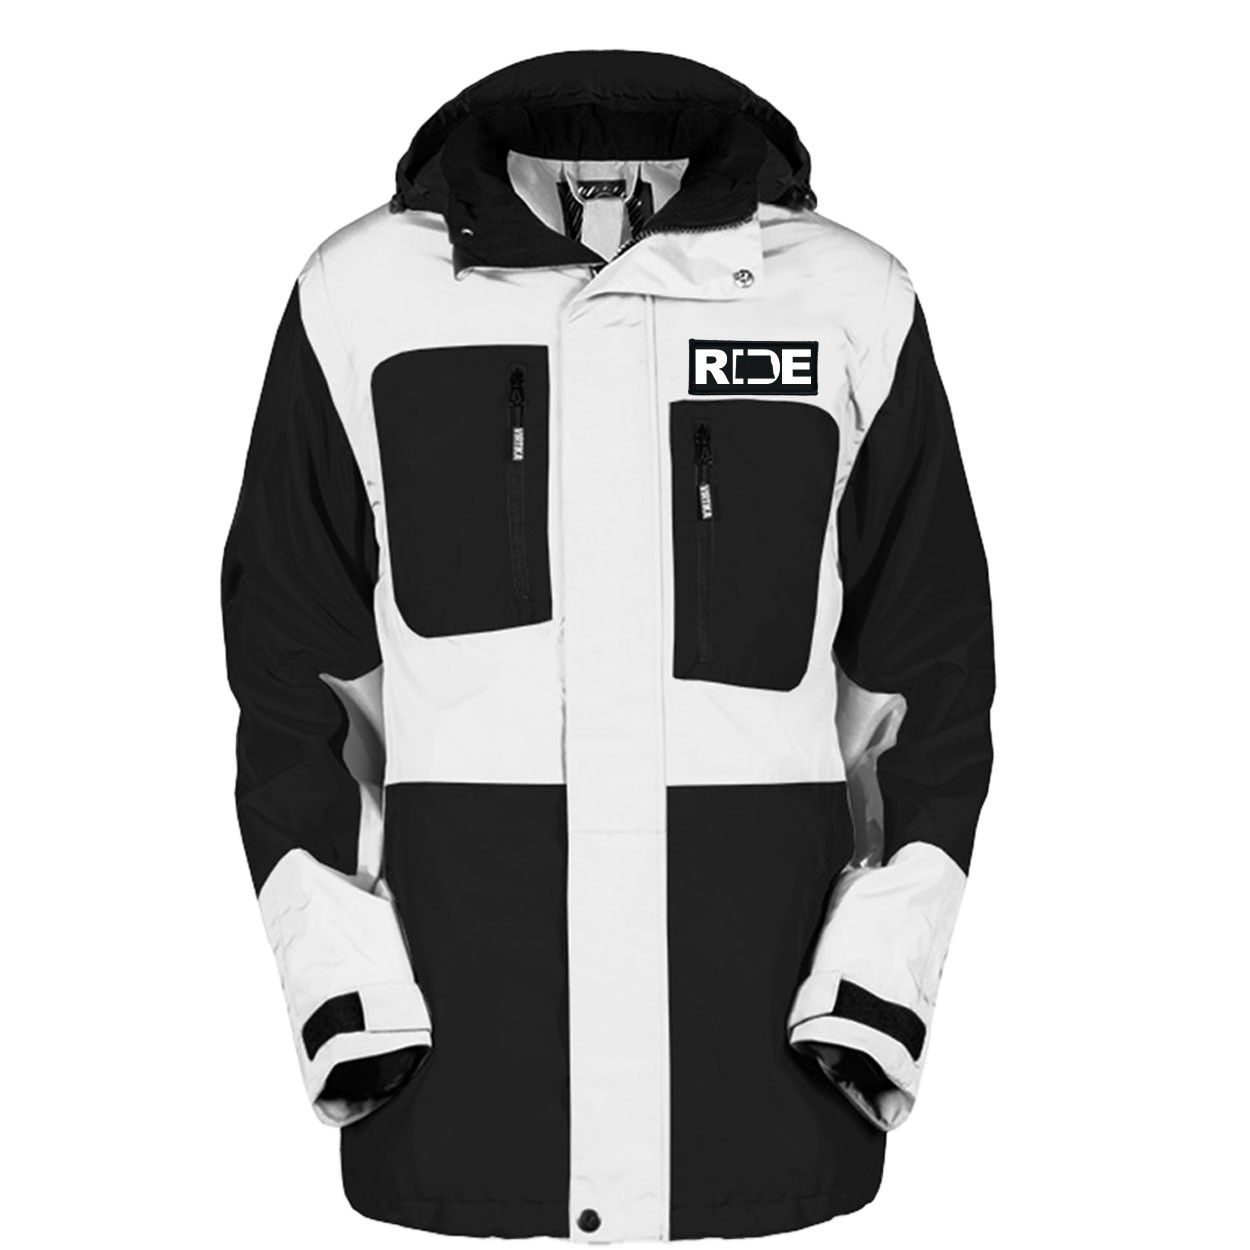 Ride North Dakota Pro Waterproof Breathable Winter Virtika Jacket Black/White (White Logo)